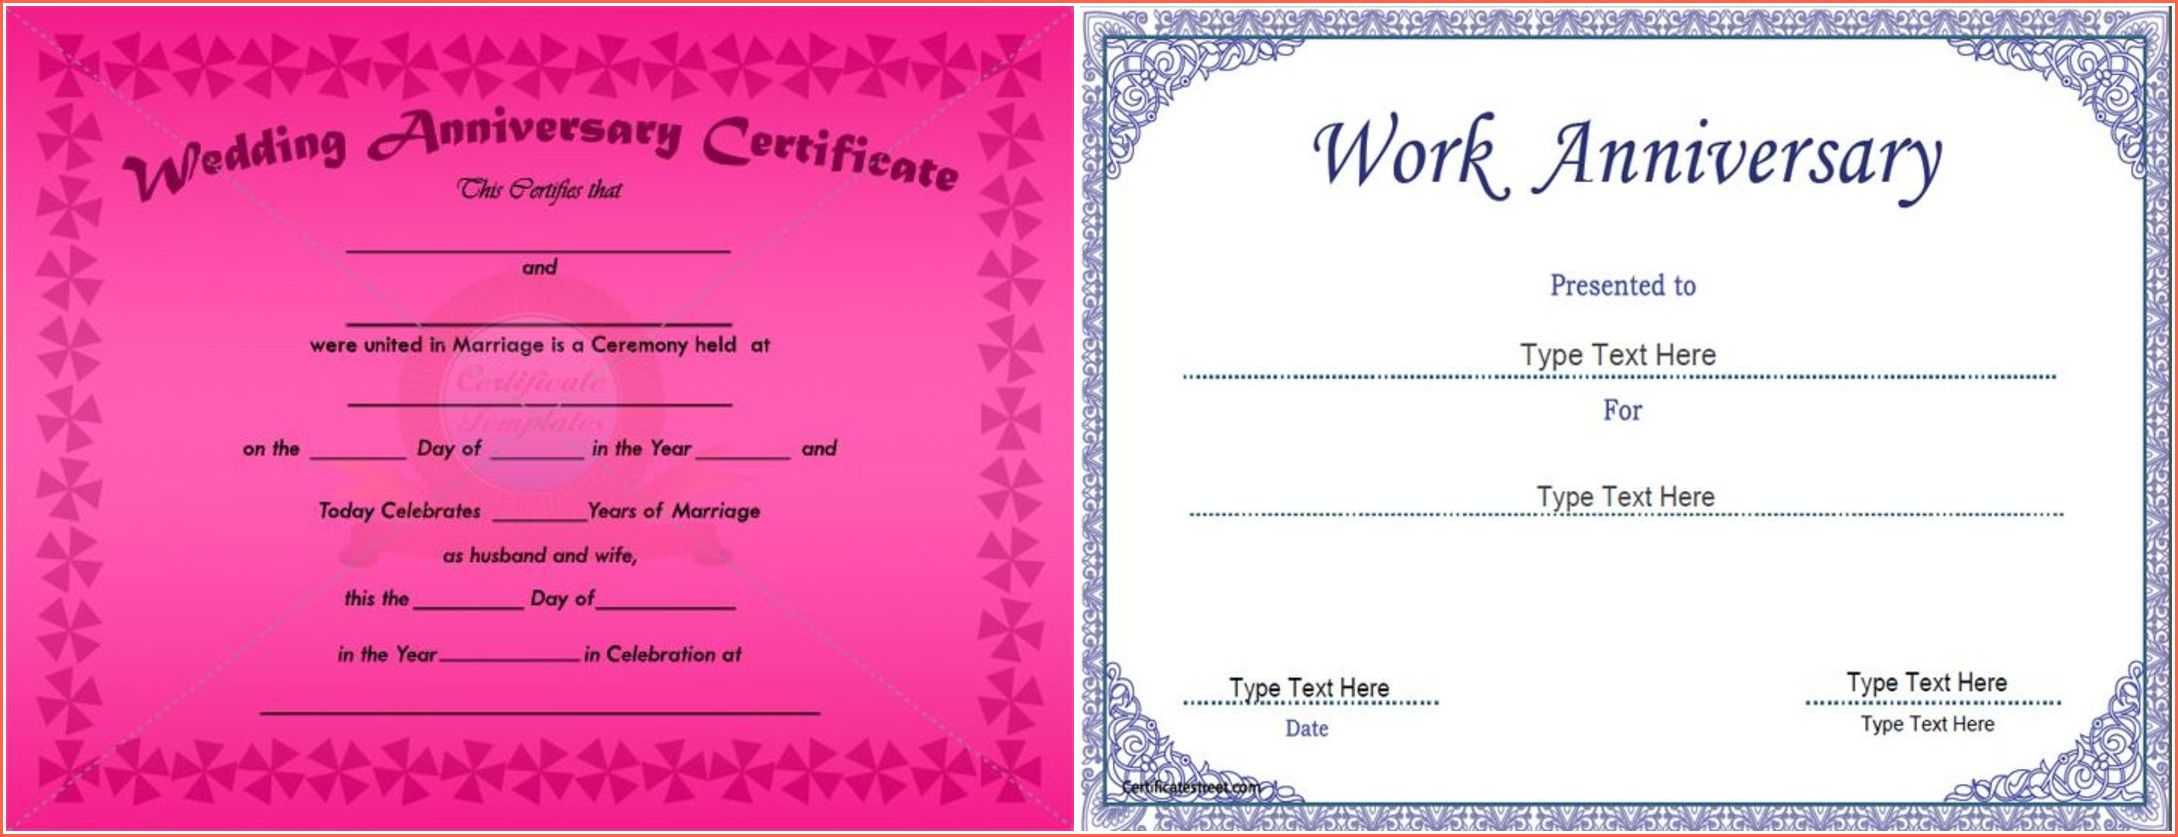 Wedding Anniversary Certificate Template Free With 25Th Gift For Anniversary Certificate Template Free